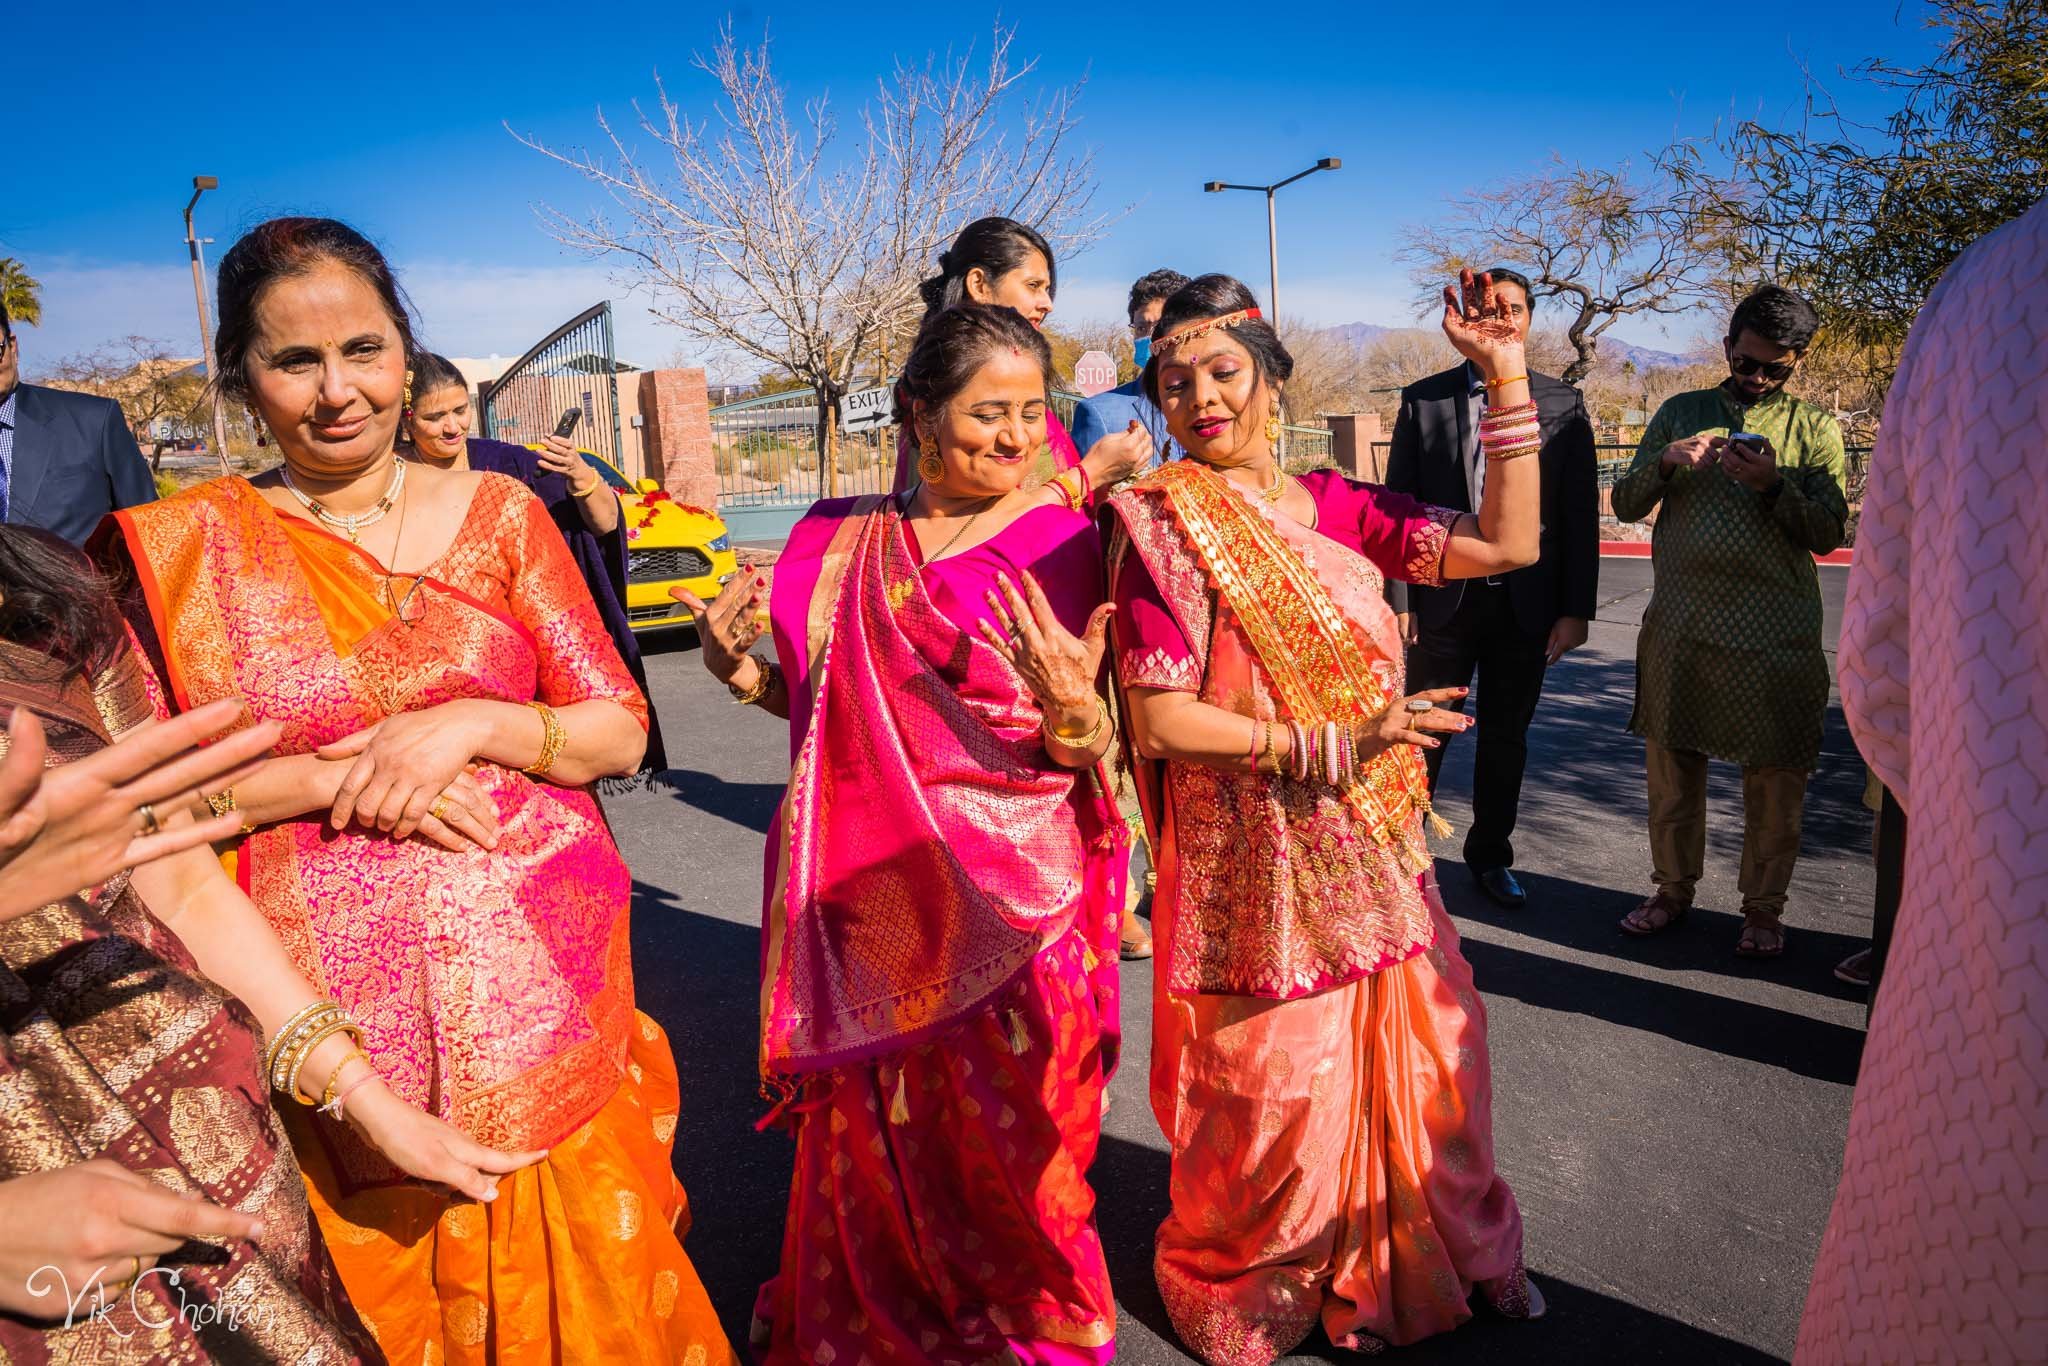 2022-02-05-Hely-&-Parth-Las-Vegas-Indian-Wedding-Photography-Vik-Chohan-Photography-Photo-Booth-Social-Media-VCP-093.jpg